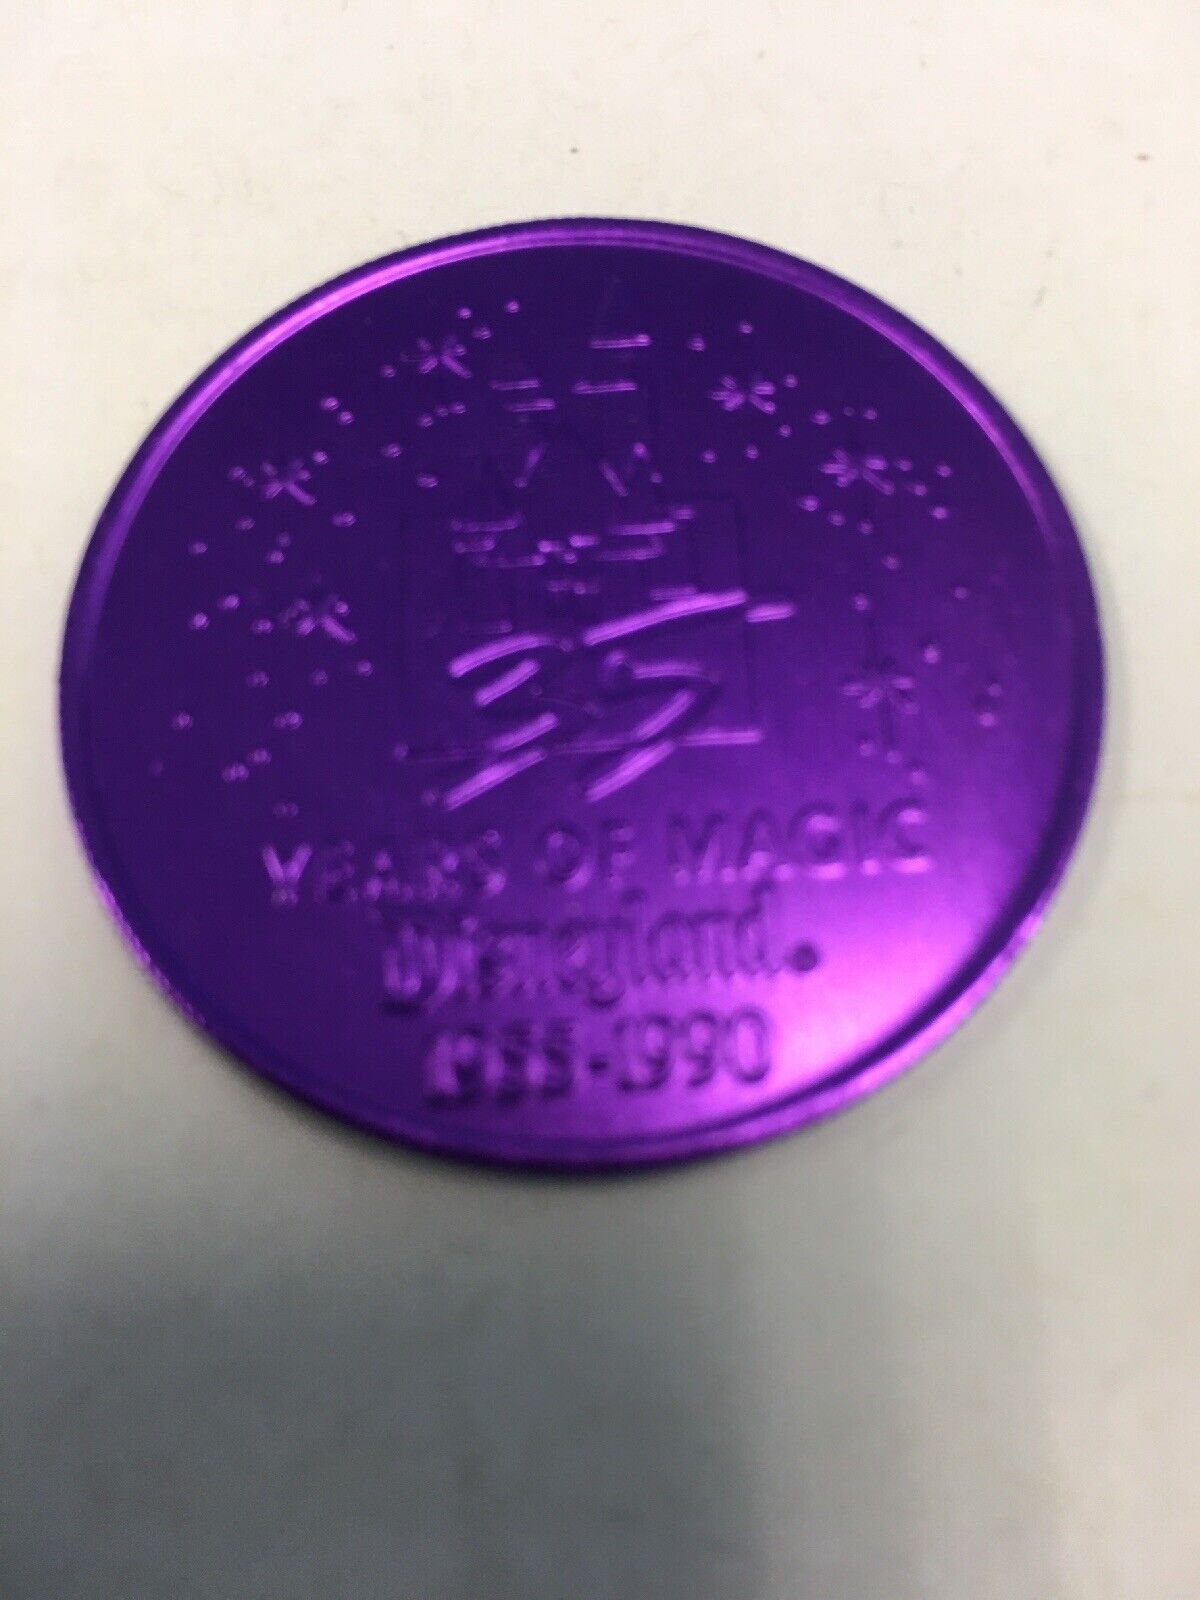 Disneyland 35th Anniversary Commemorative Promotional Purple Coin